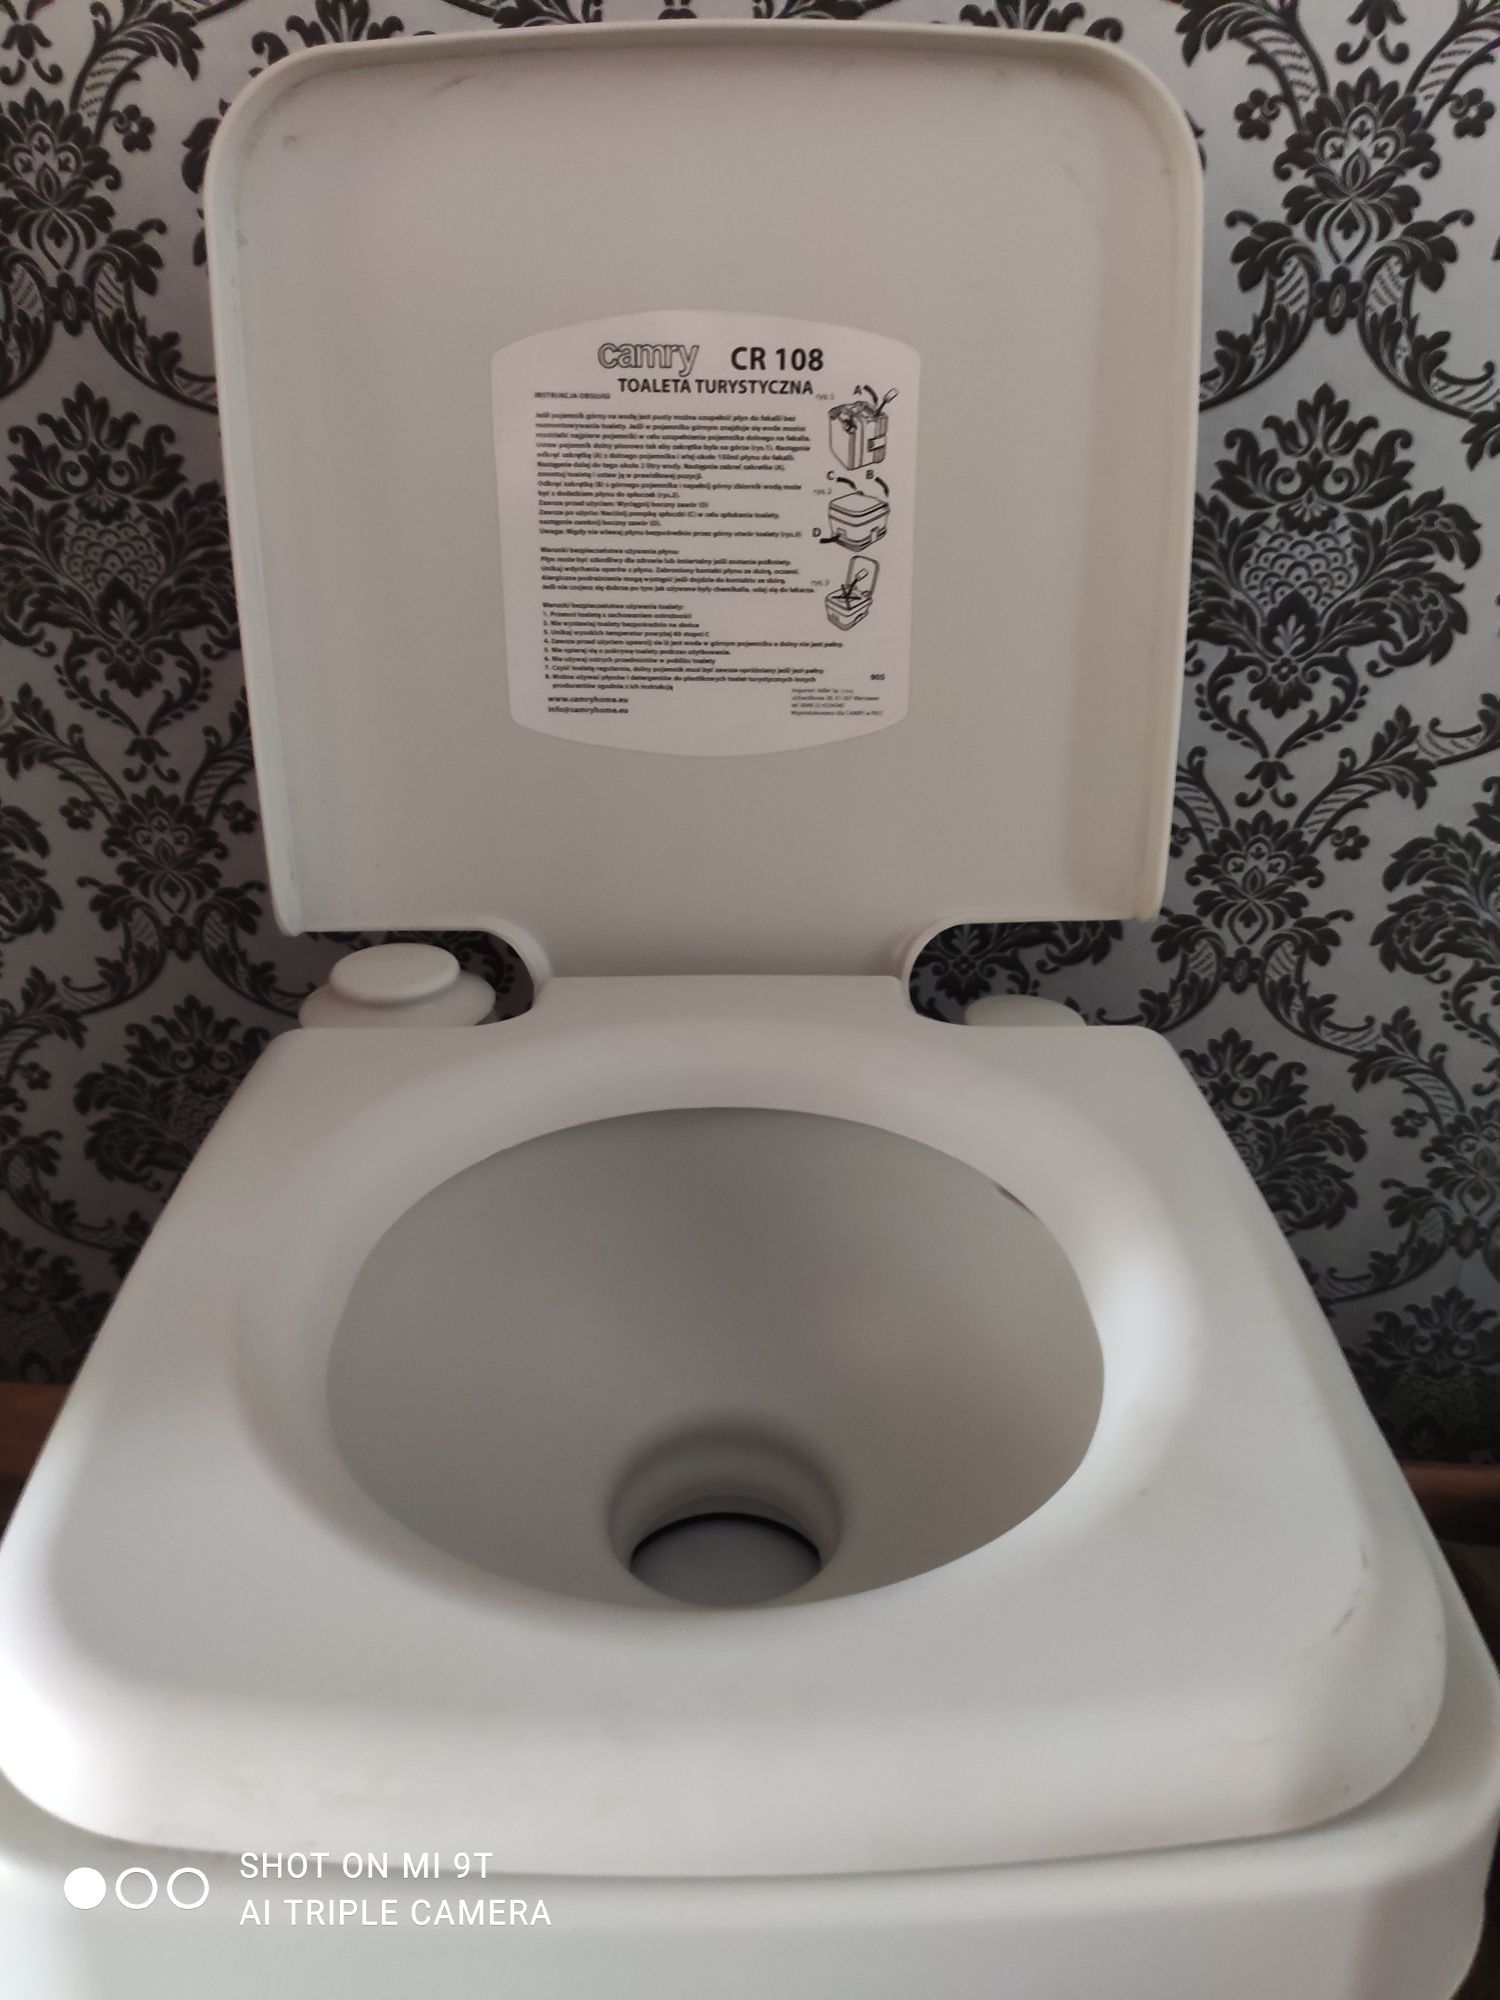 Toaleta turystyczna Camry CR 108